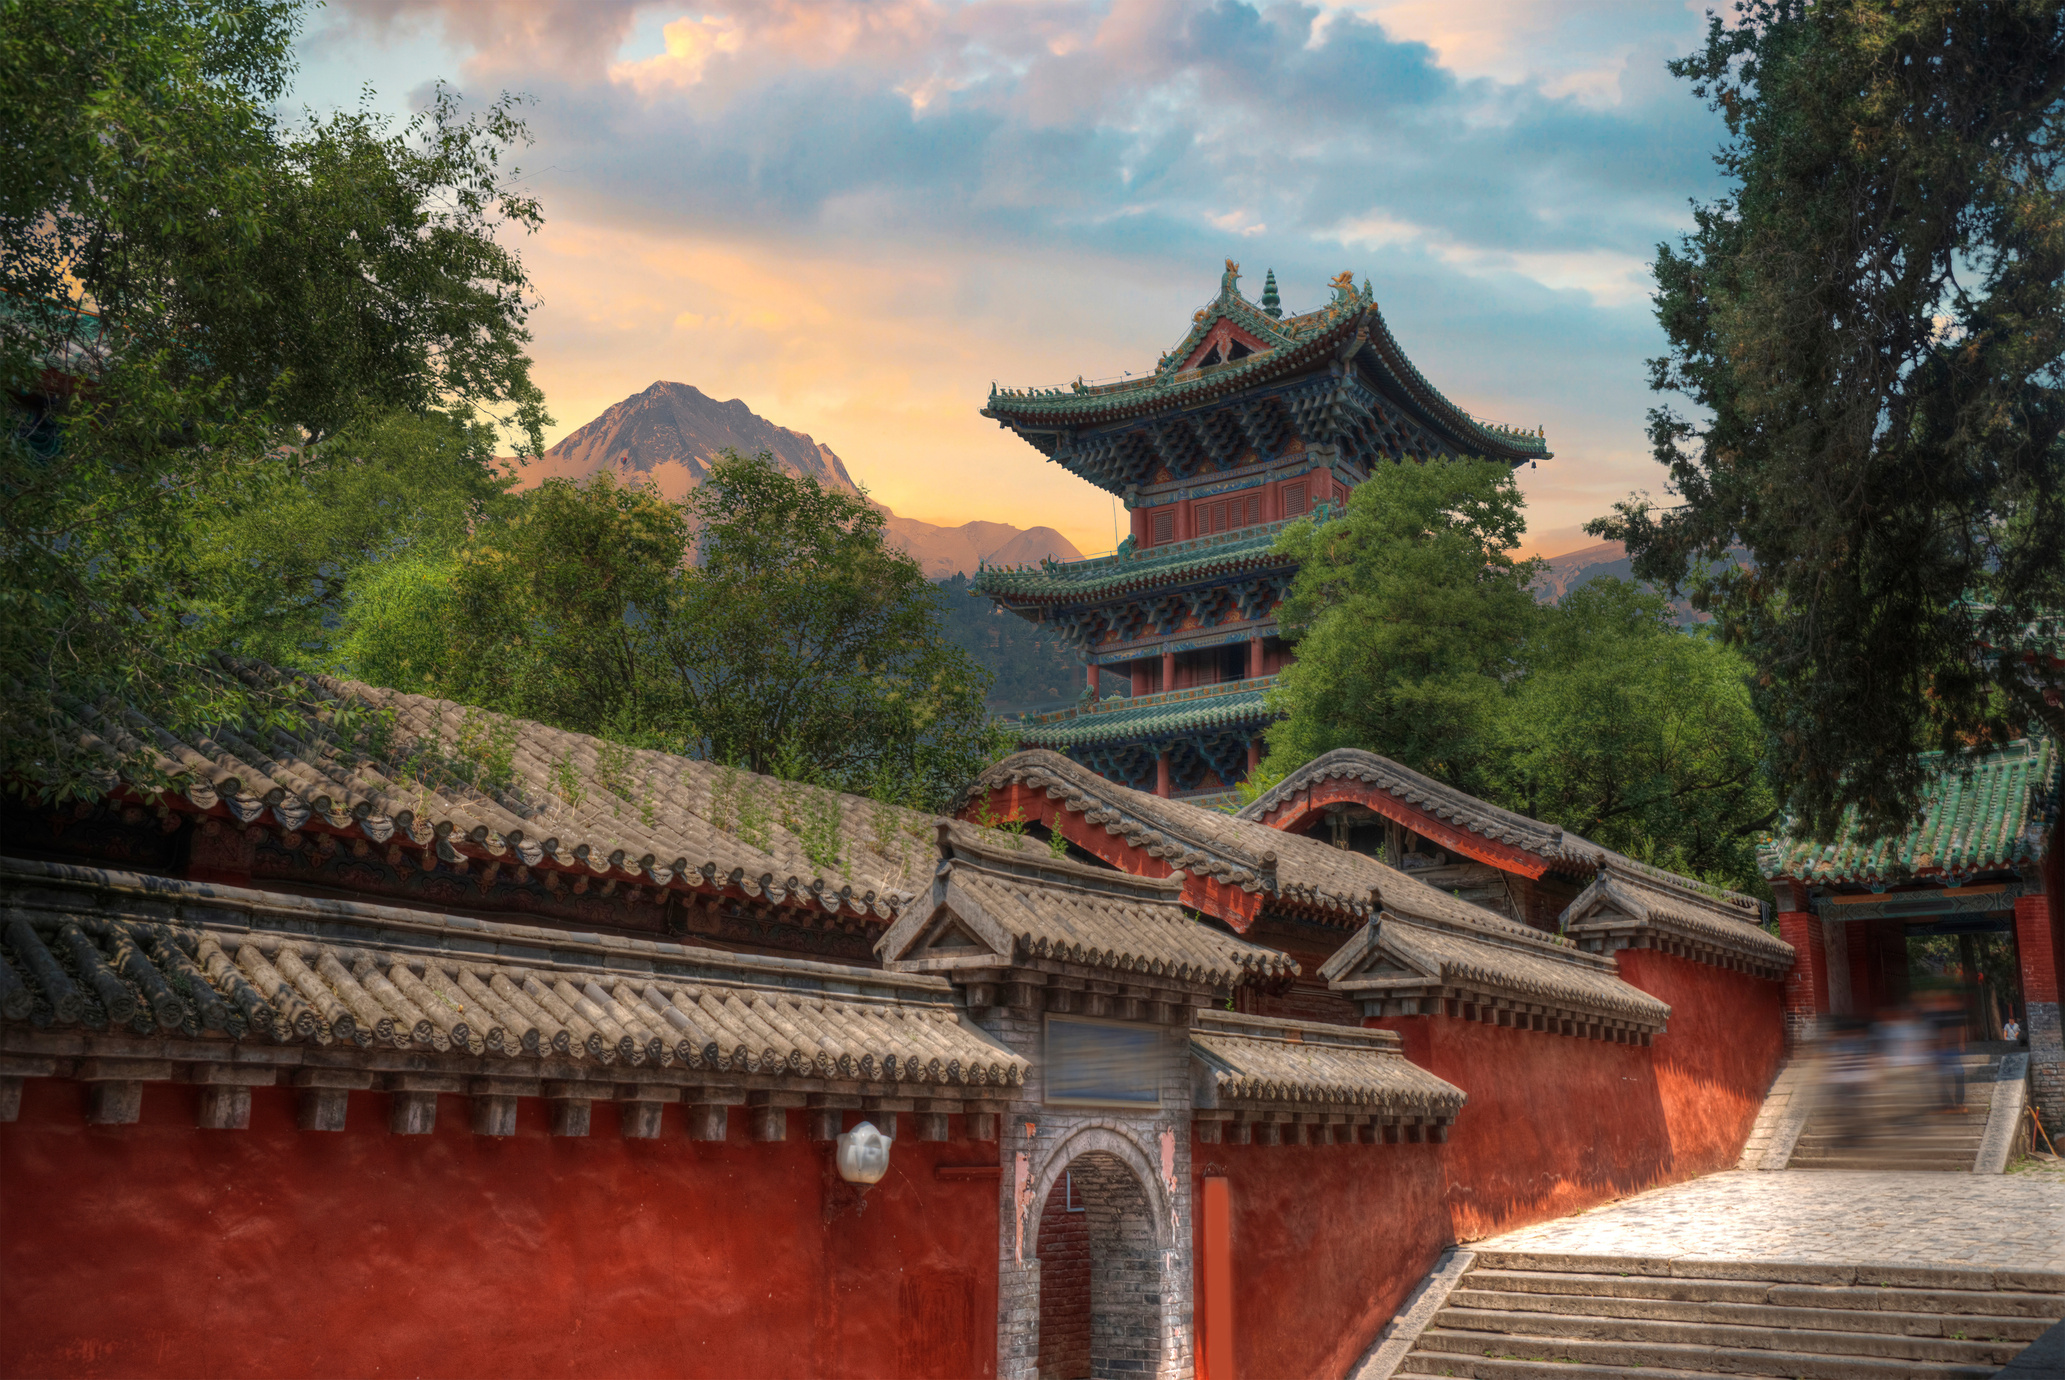 Shaolin Buddhist Monastery in Central China